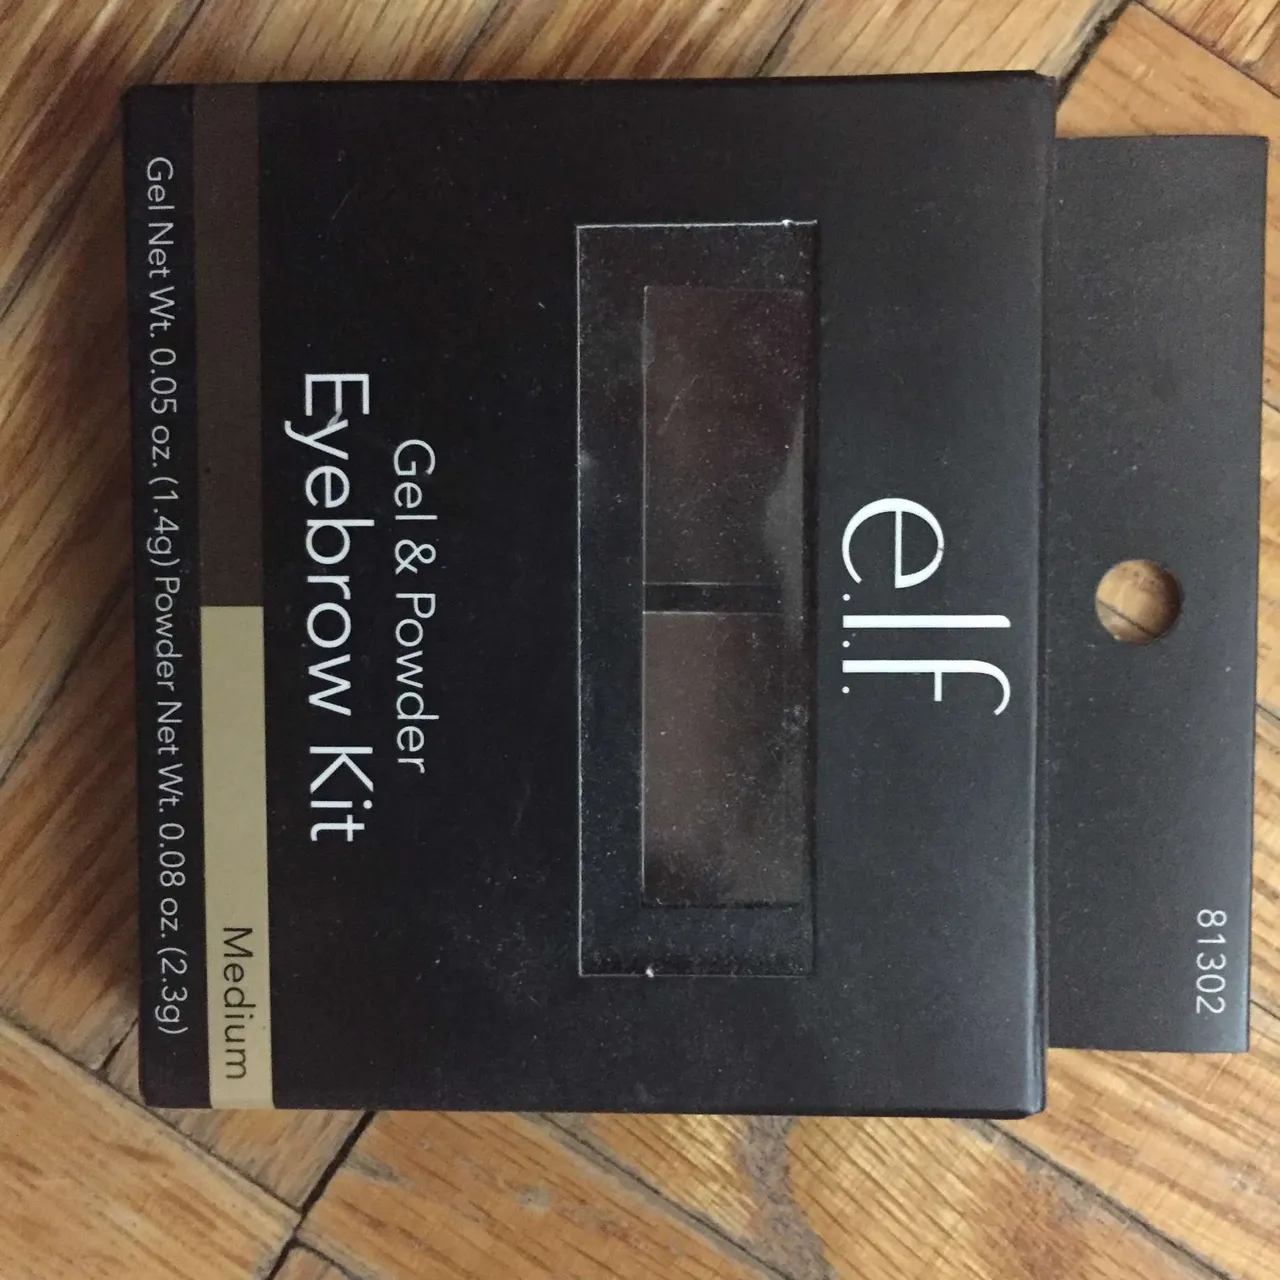 e.l.f eyebrow gel and powder makeup photo 1